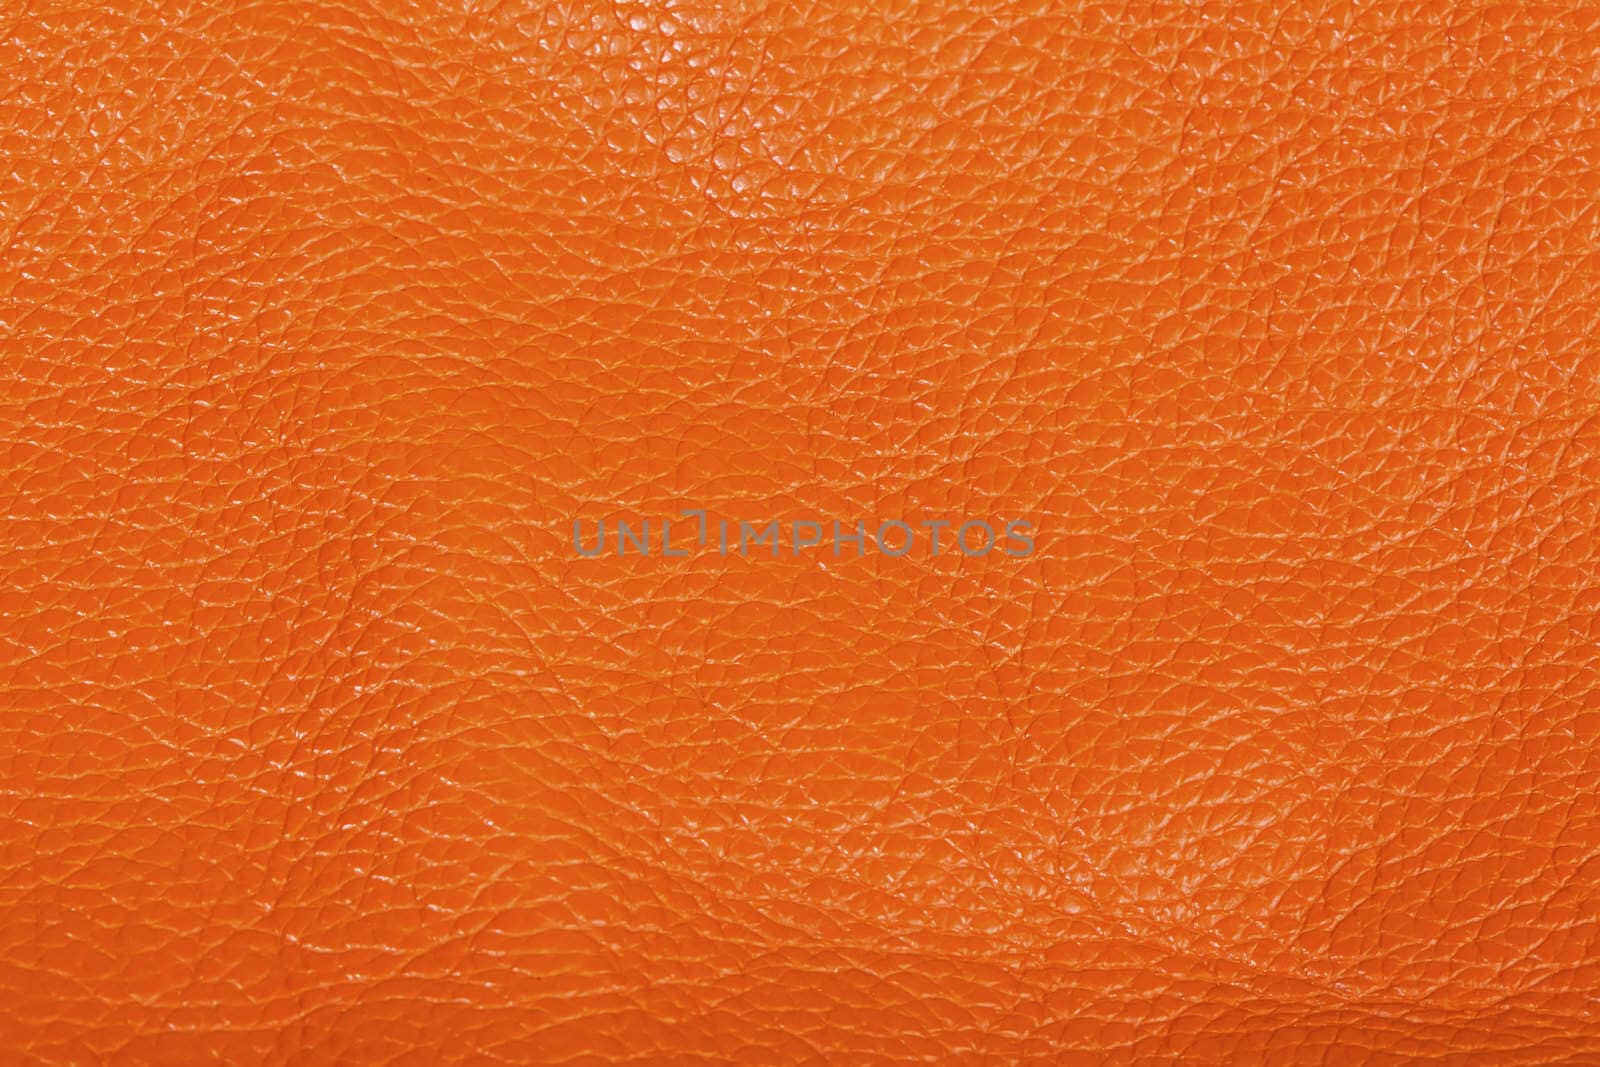 Natural orange leather texture